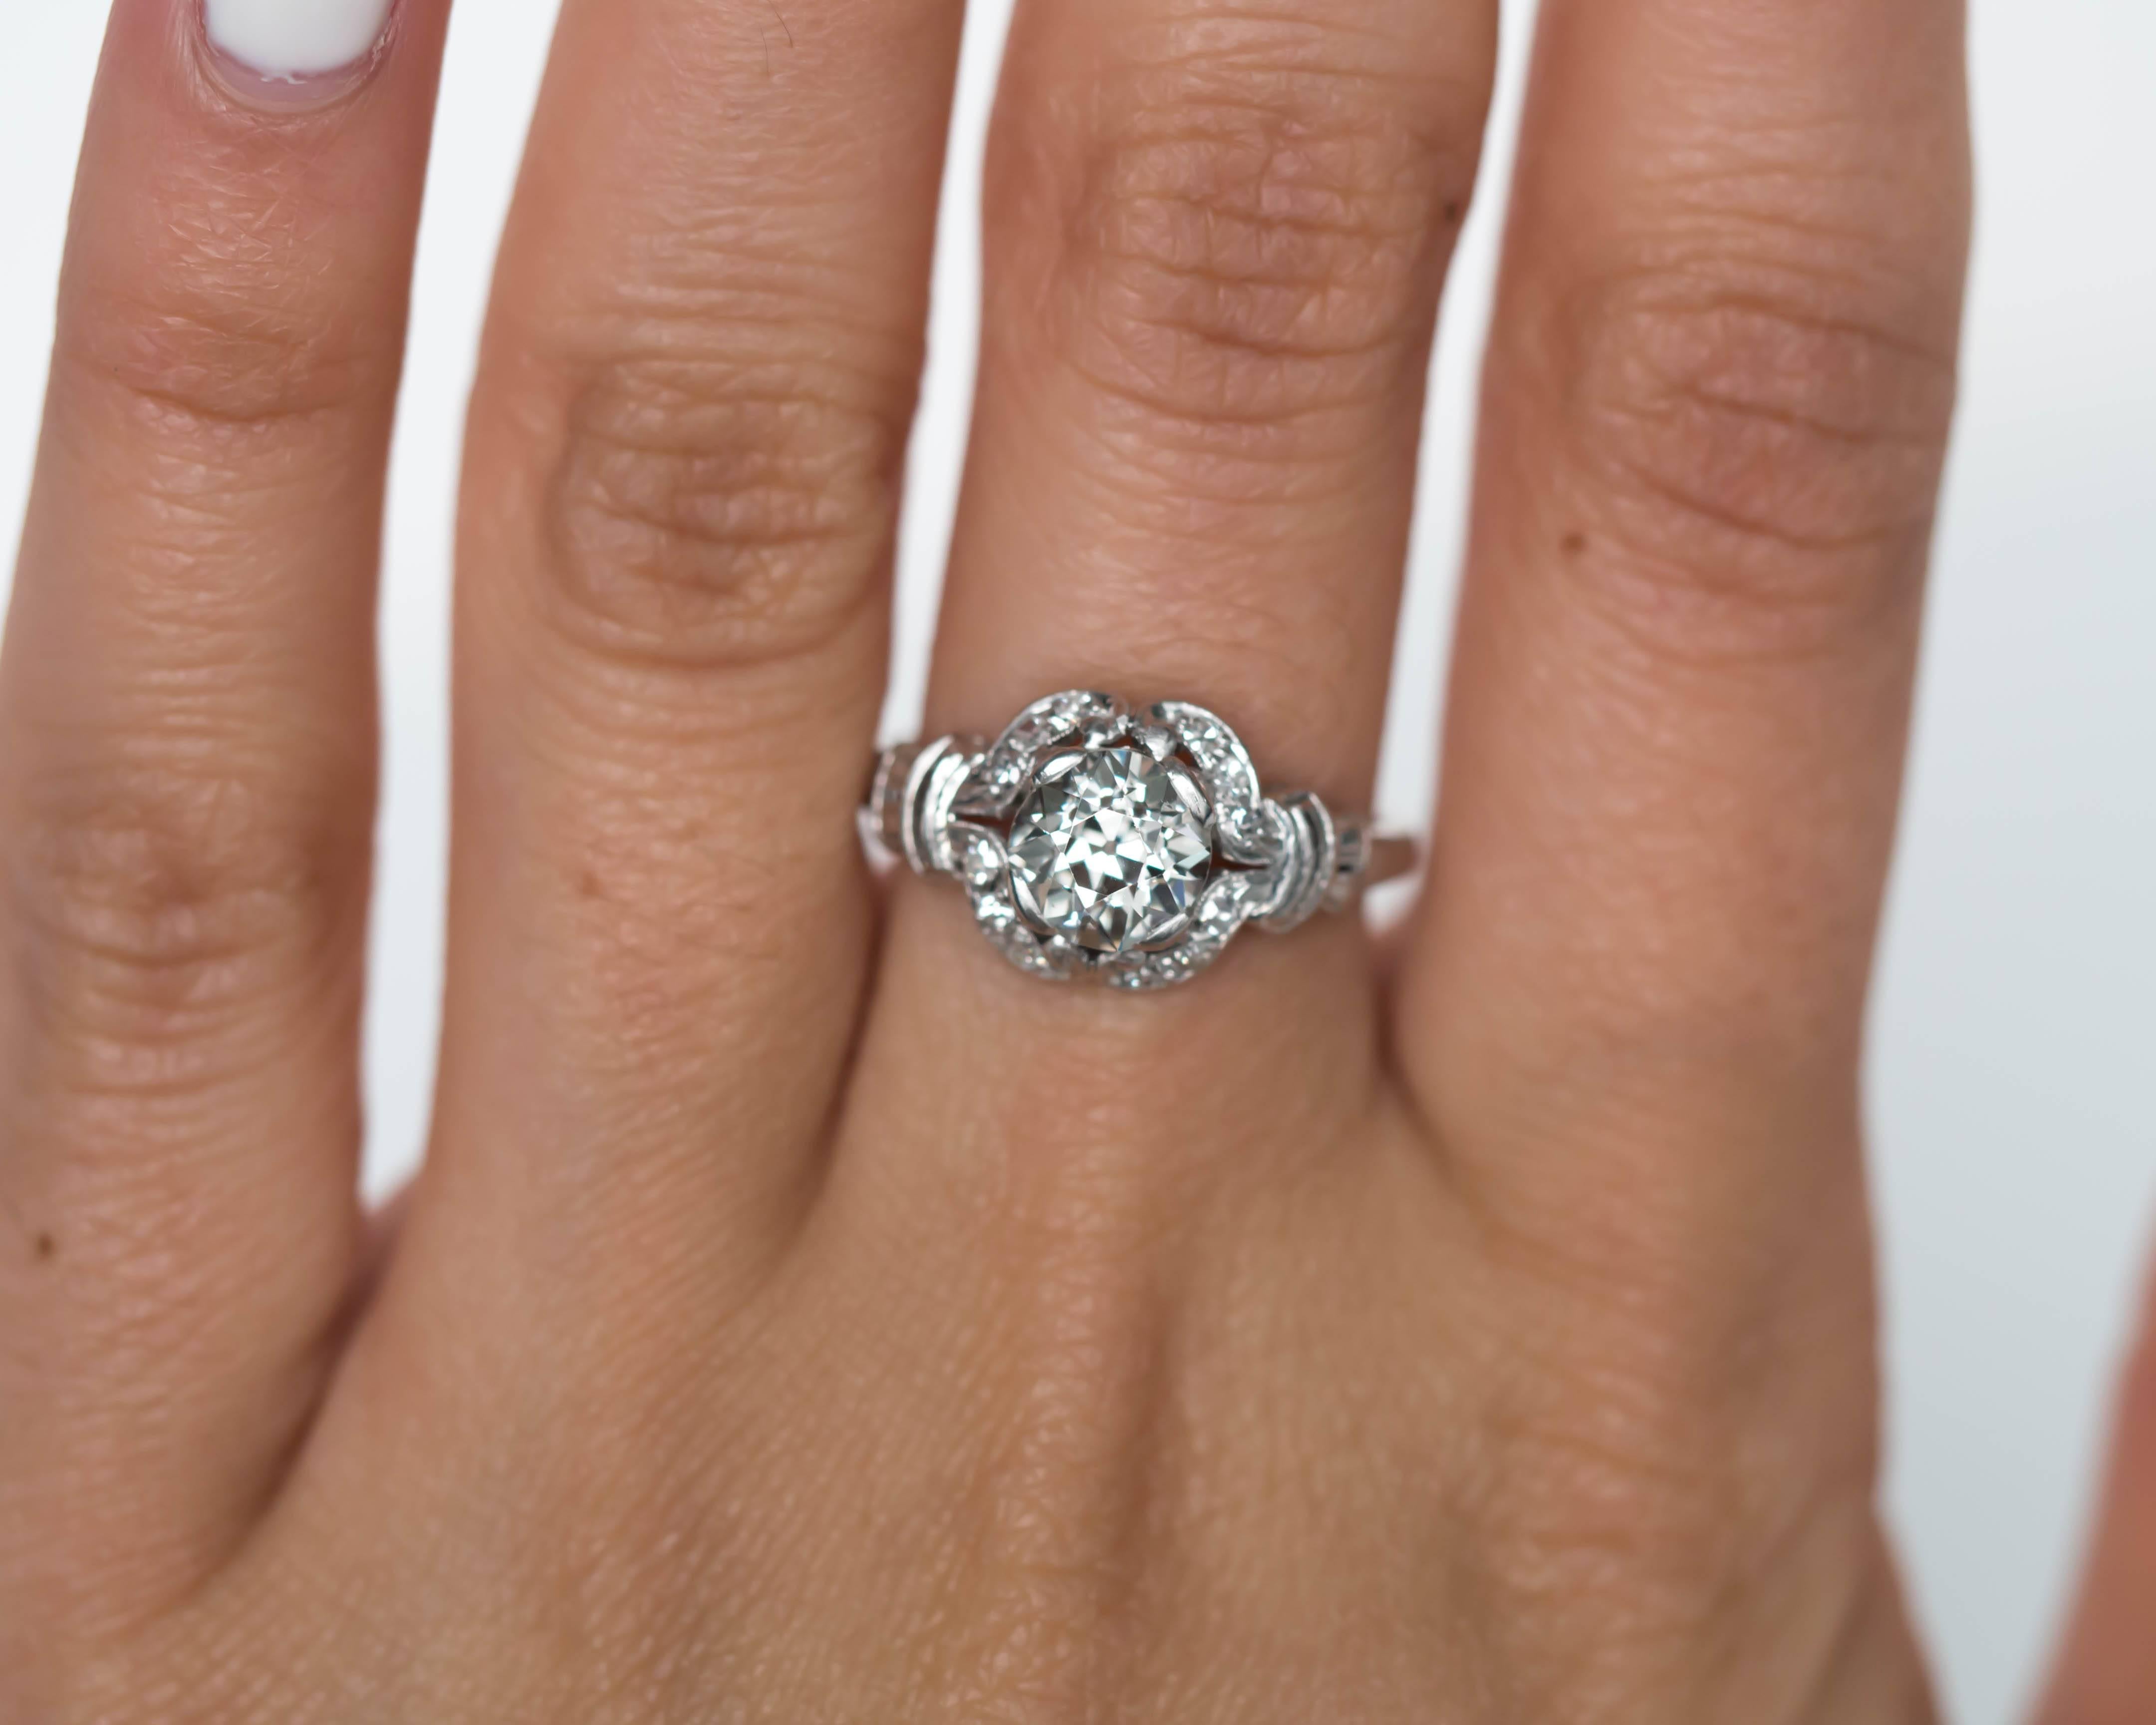 1910 Edwardian Platinum GIA Certified 1.02 Carat Diamond Engagement Ring For Sale 2